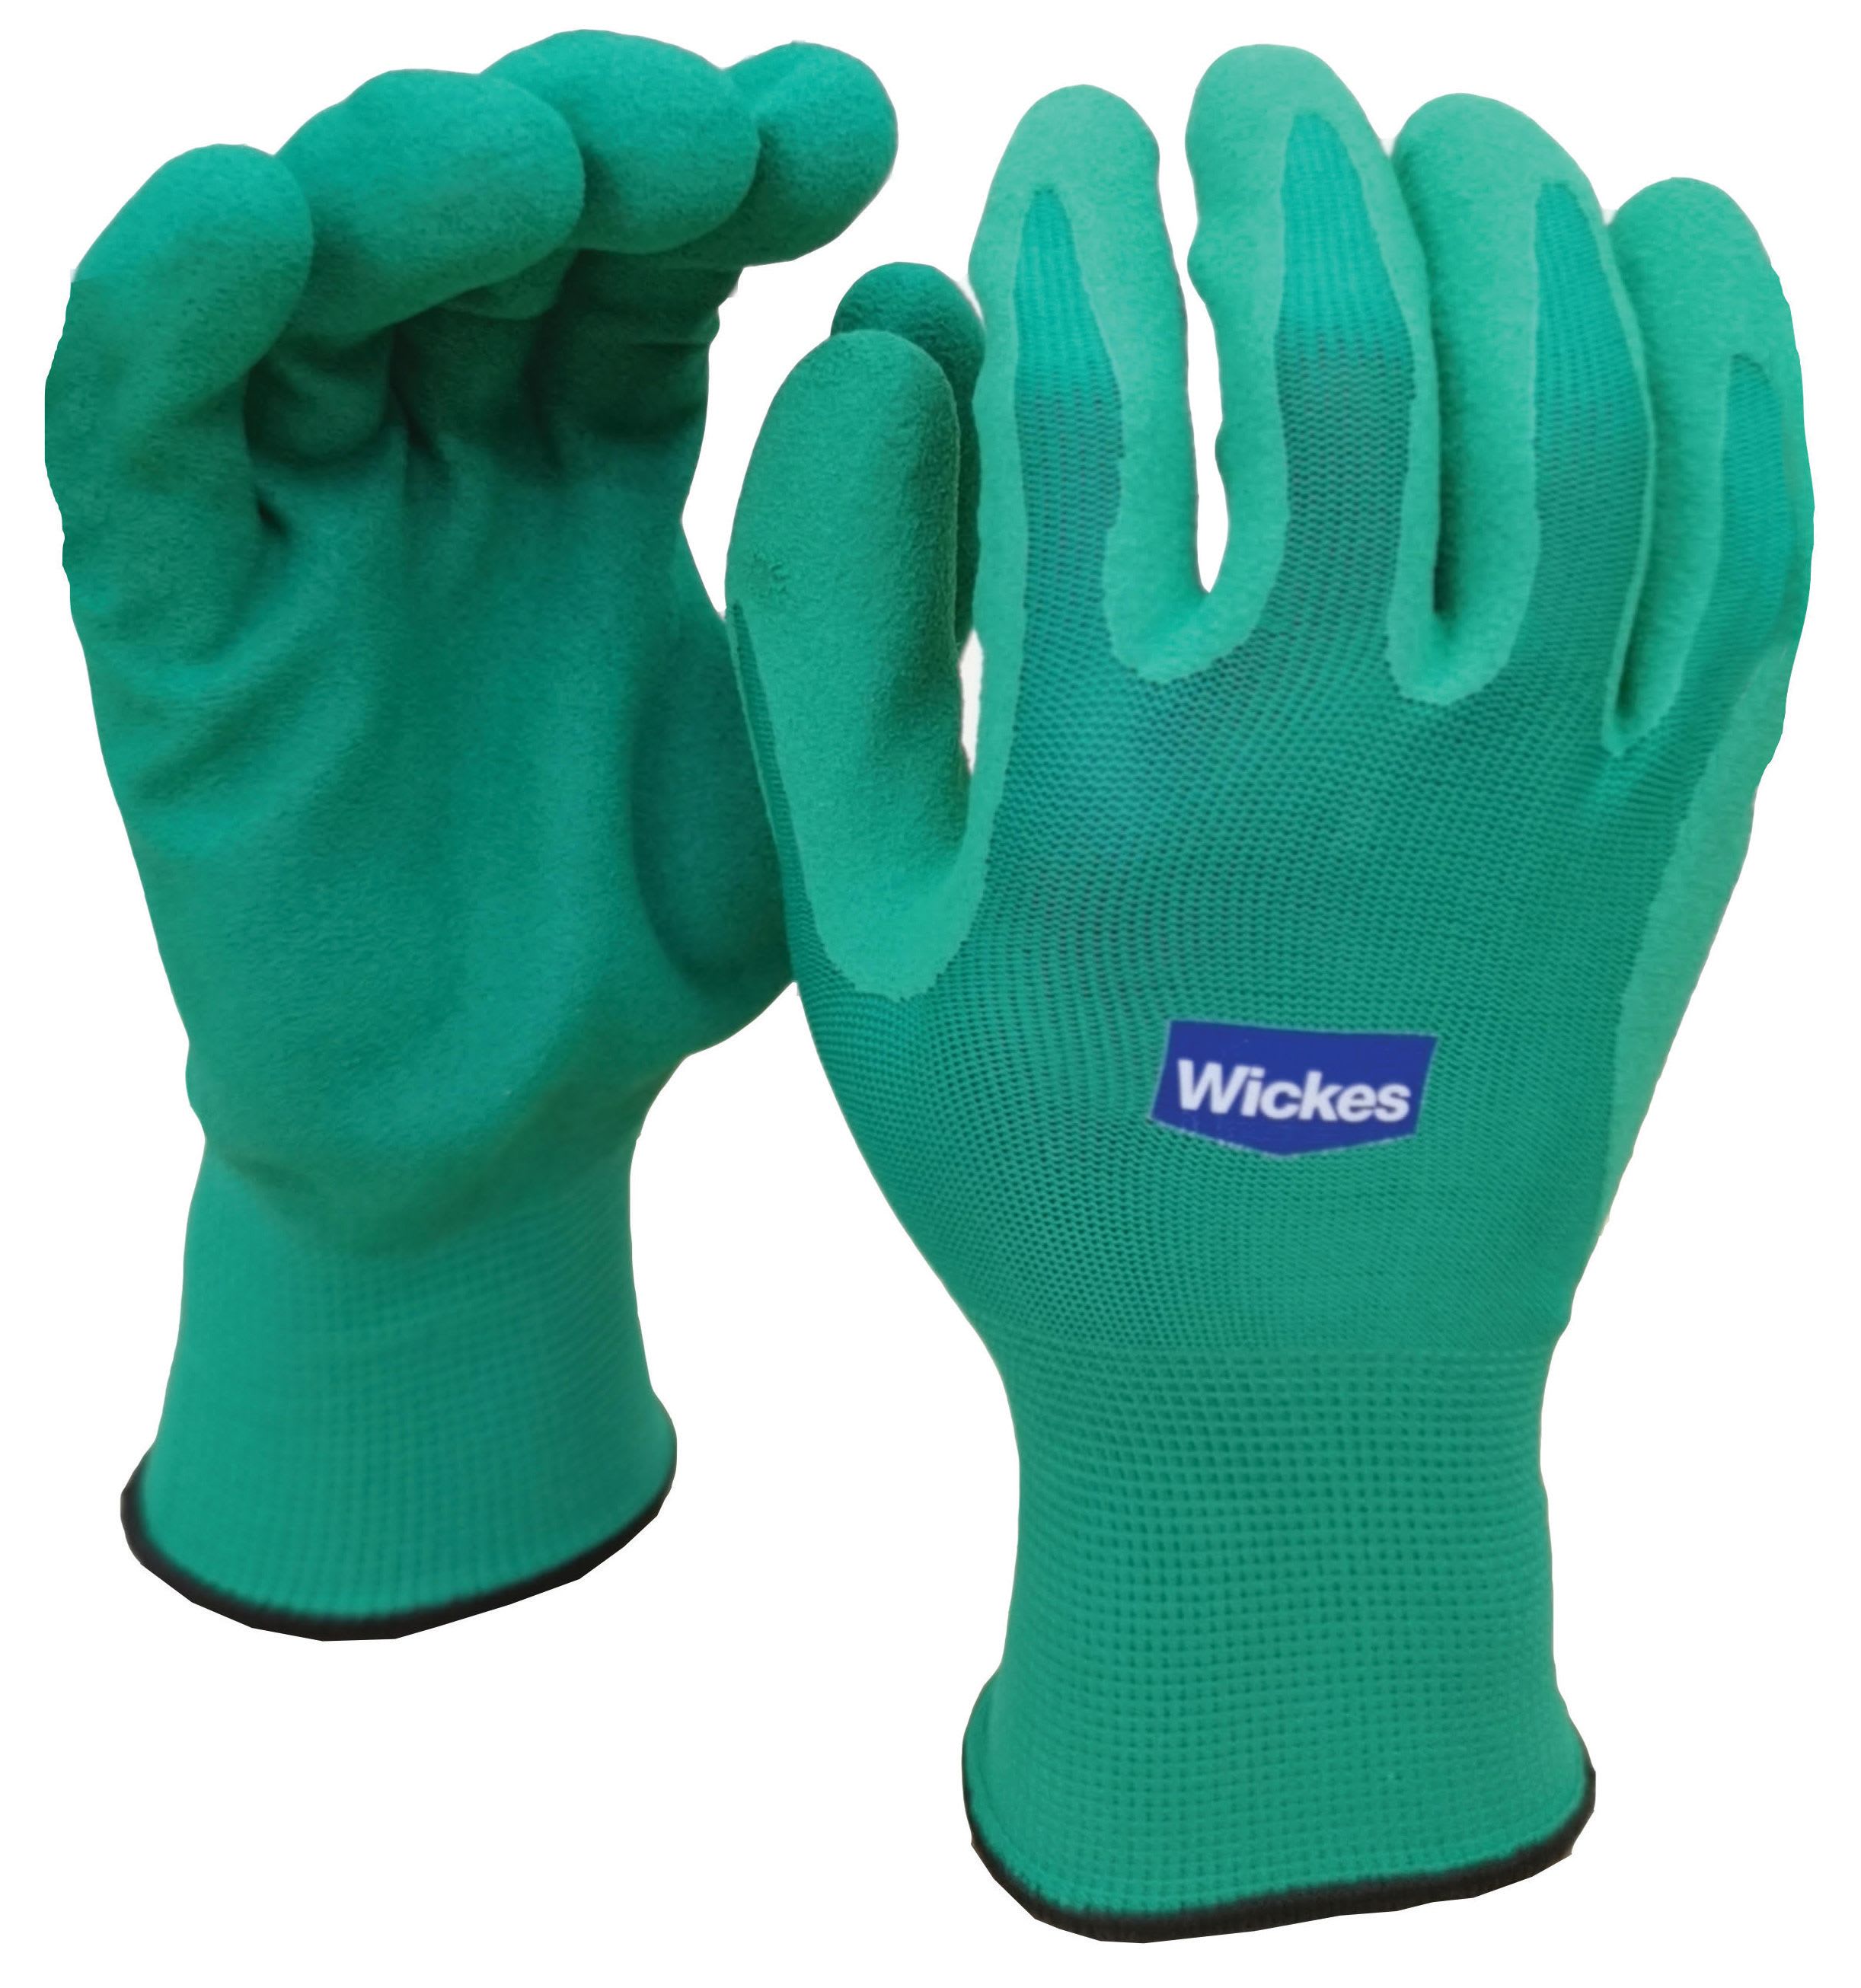 Wickes Gardening Gloves - Medium